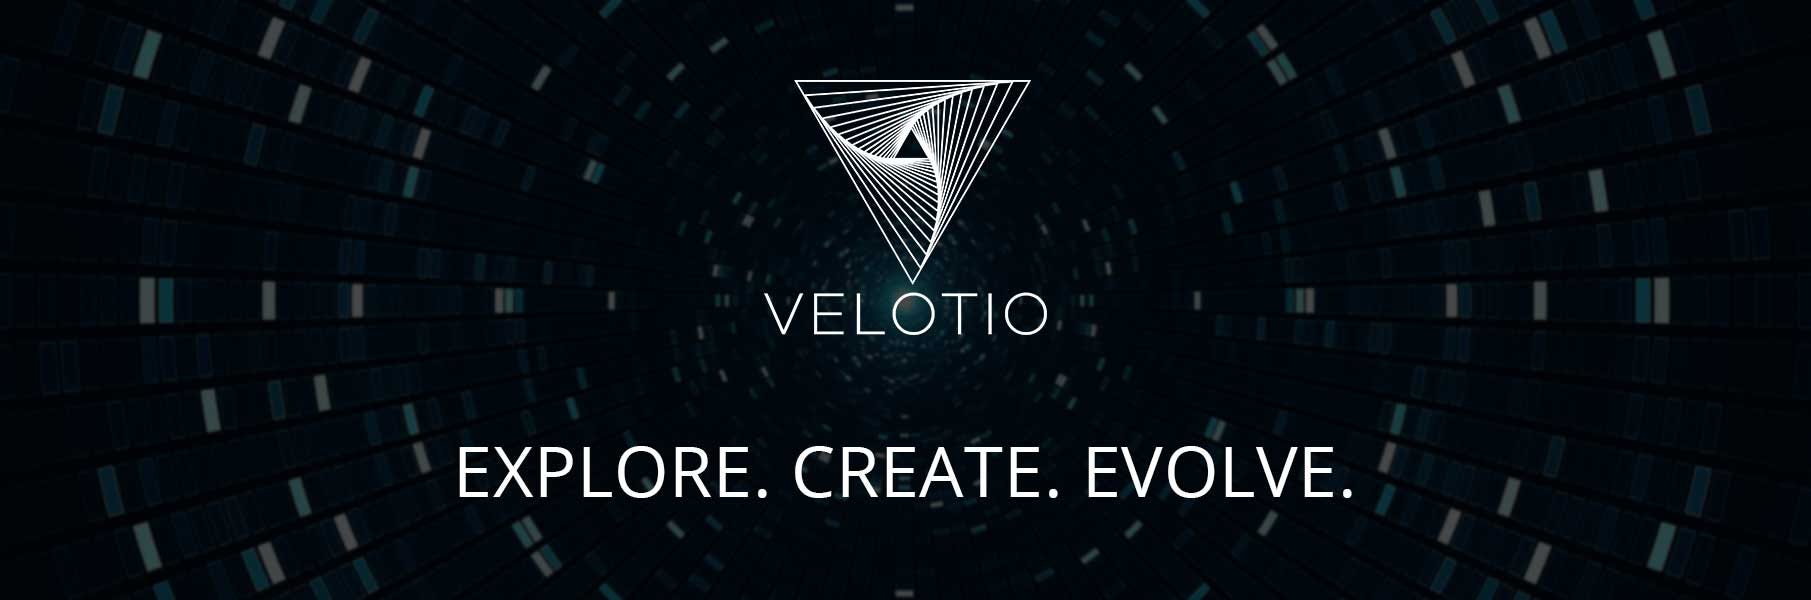 Velotio Insights & Weekly Reading — 21st Sep 2018 | by Velotio Technologies | Velotio Perspectives | Medium